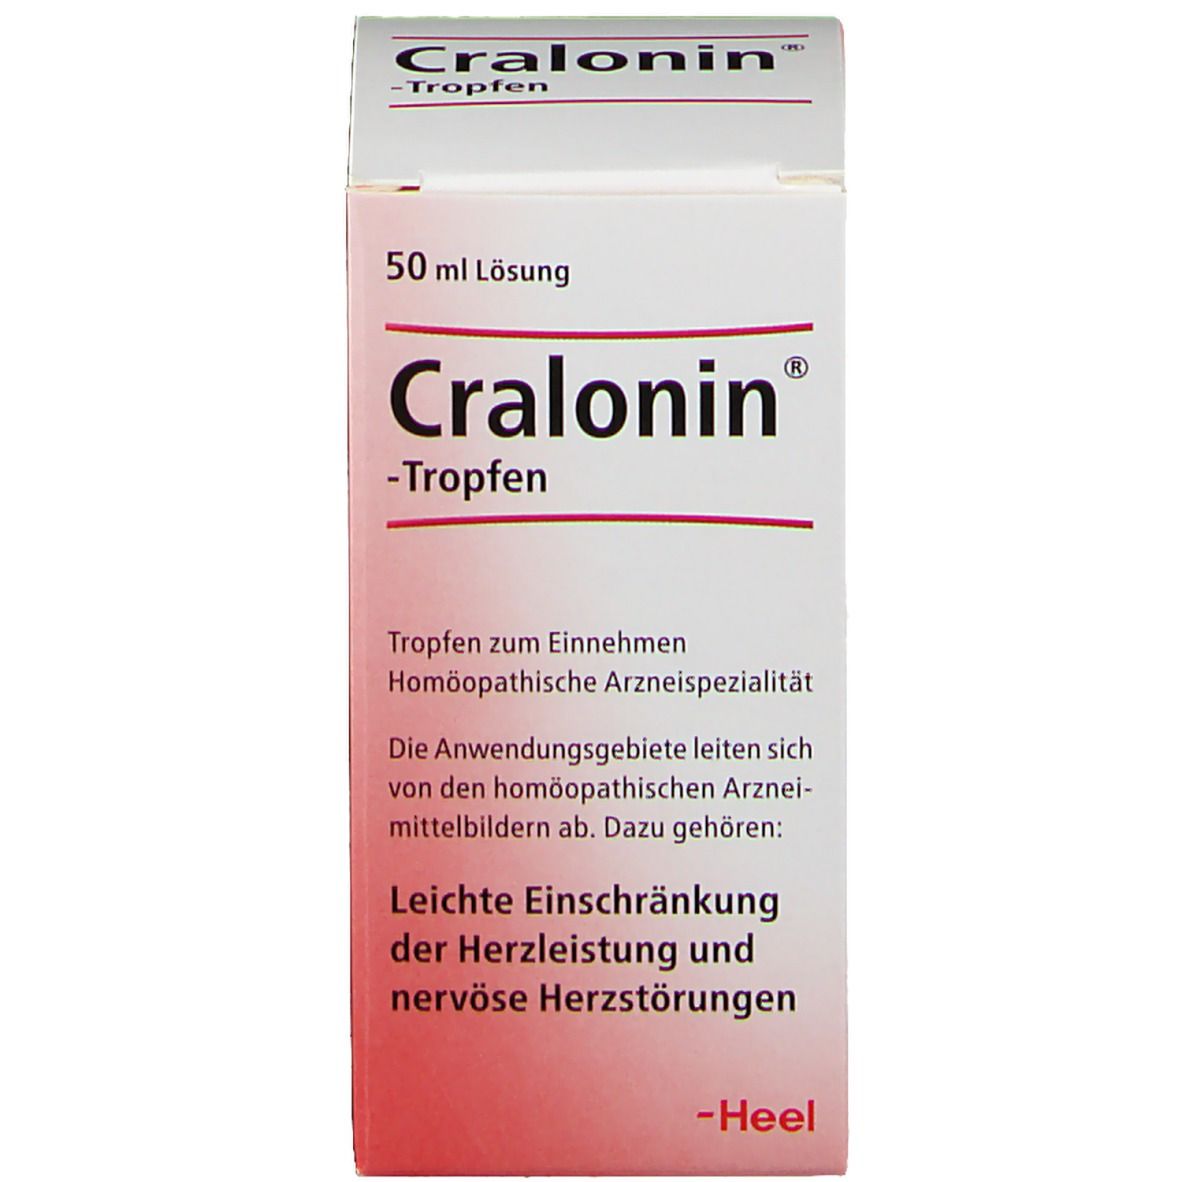 Cralonin®-Tropfen